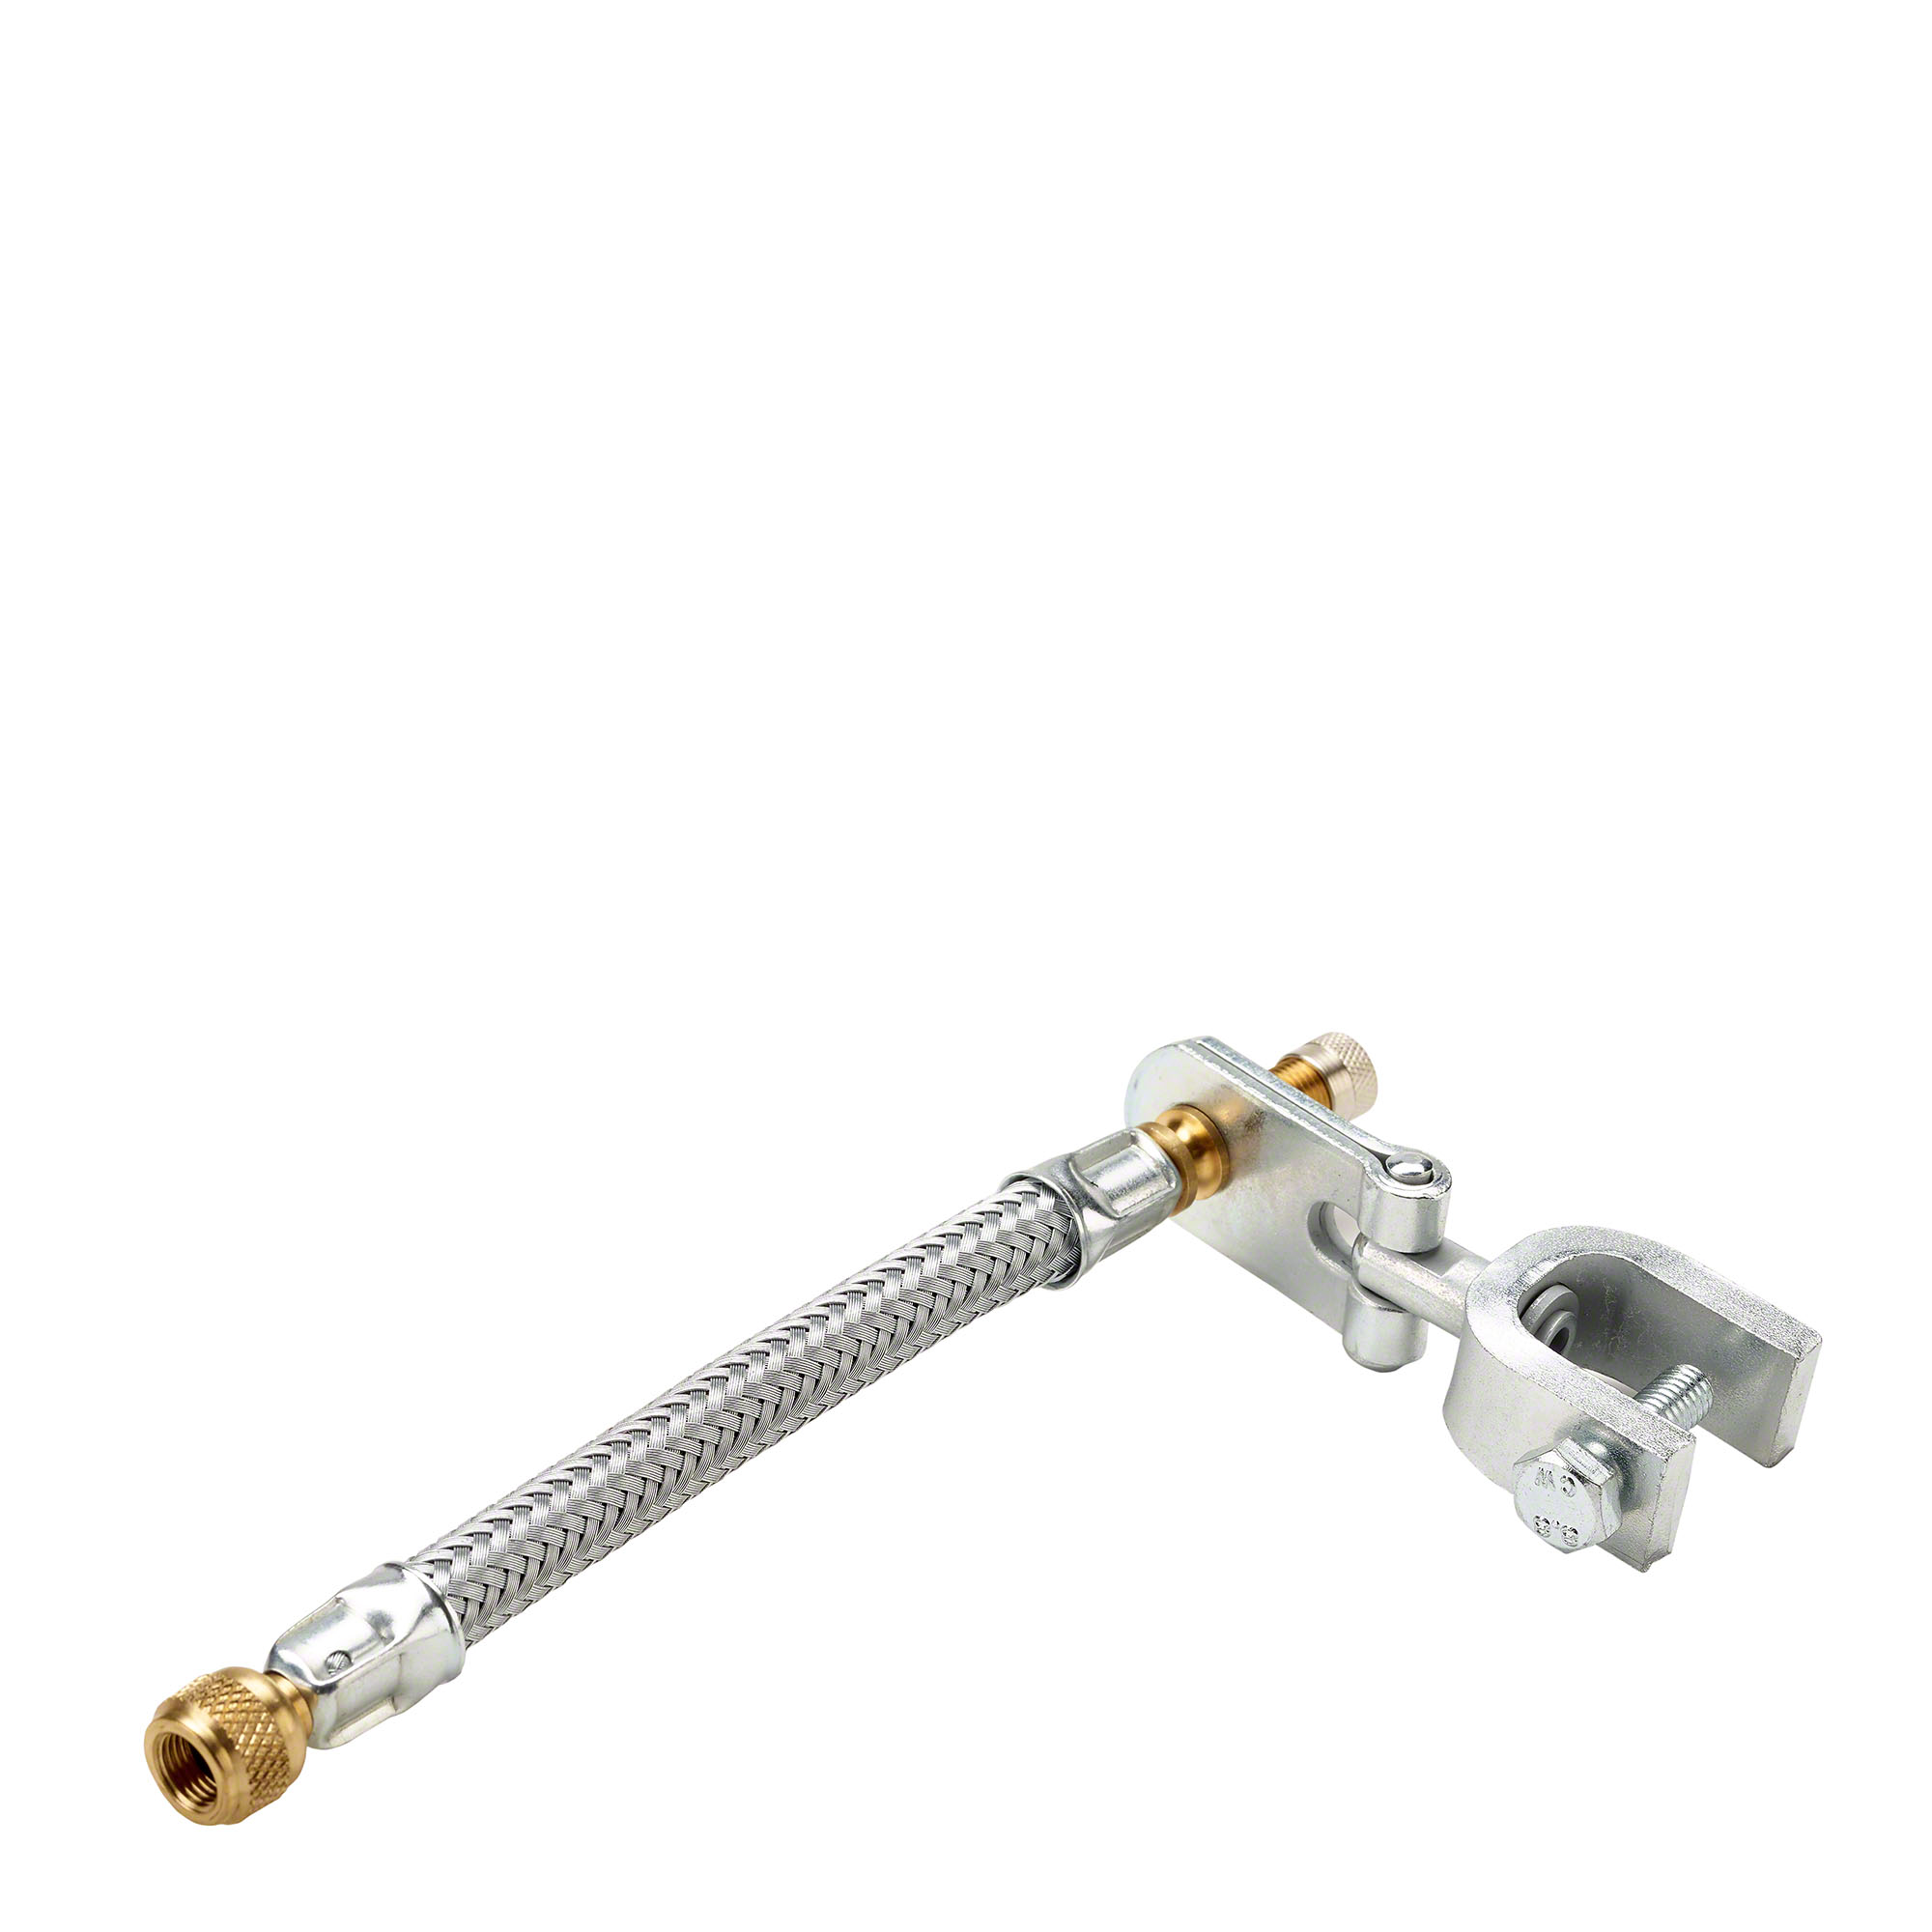 Valve extension - 144 mm, swivel clamp